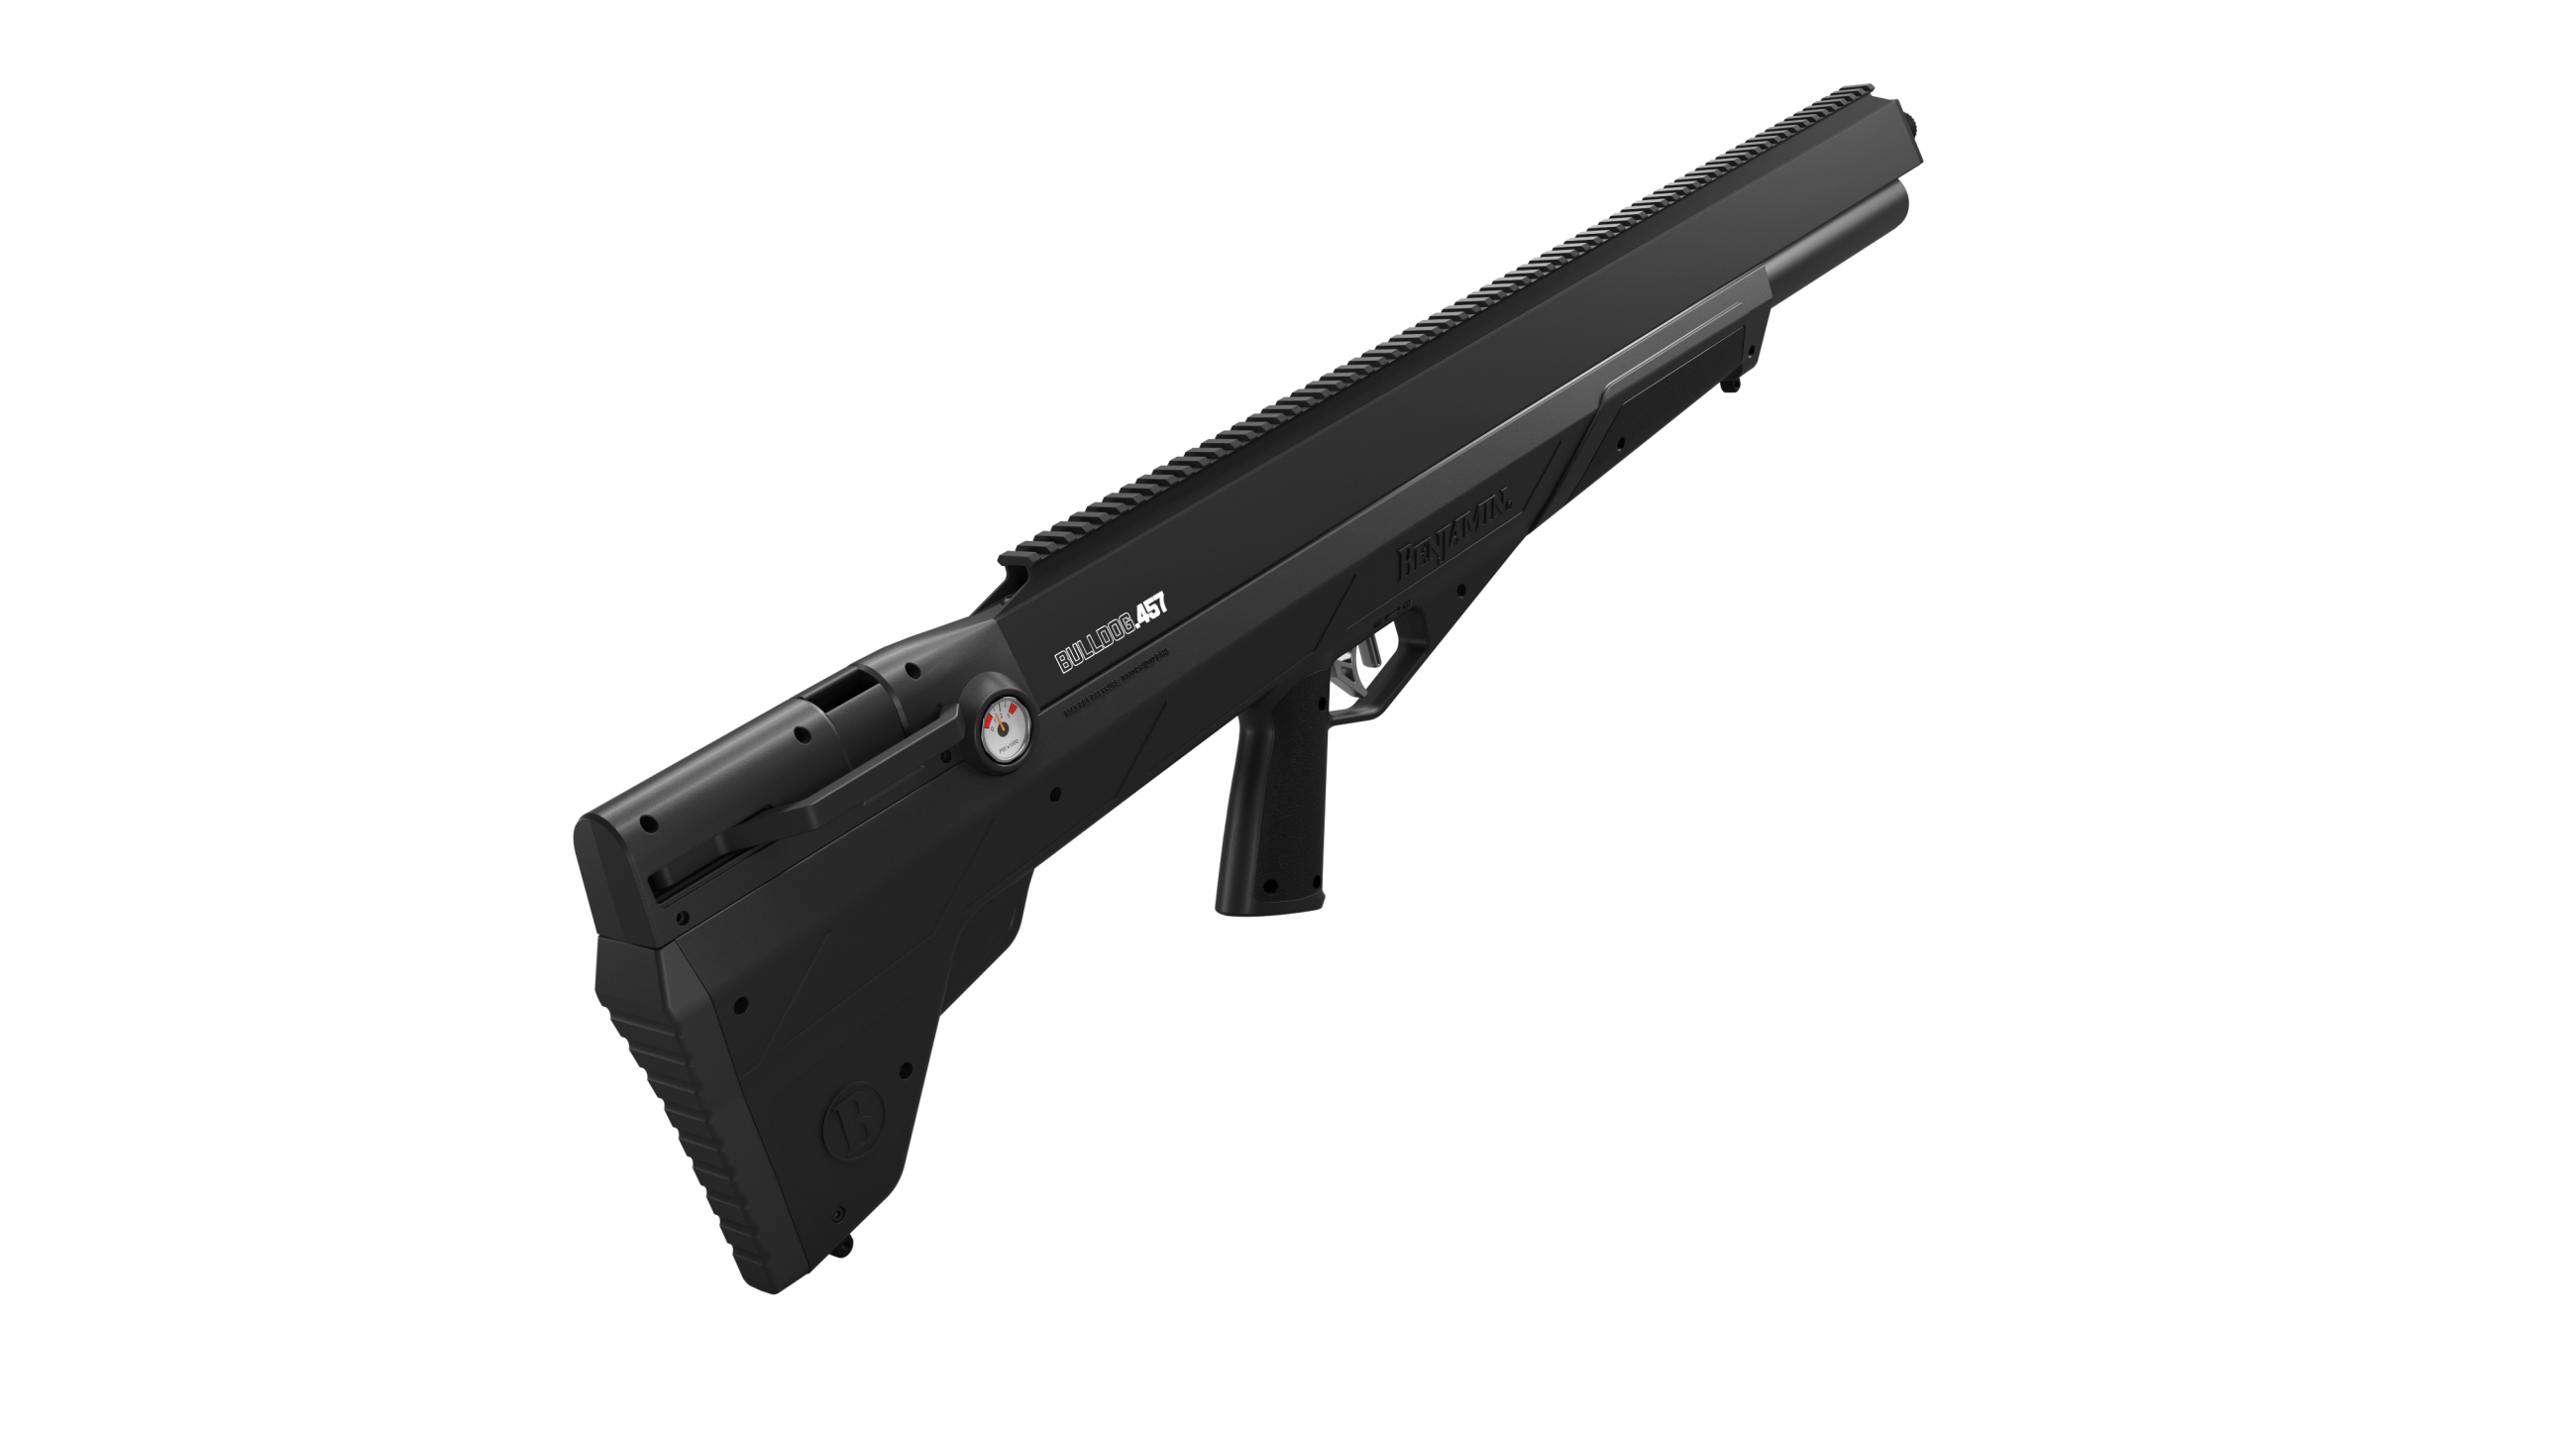 Big Bore Air - The New Benjamin Bulldog 457 PCP Air Rifle